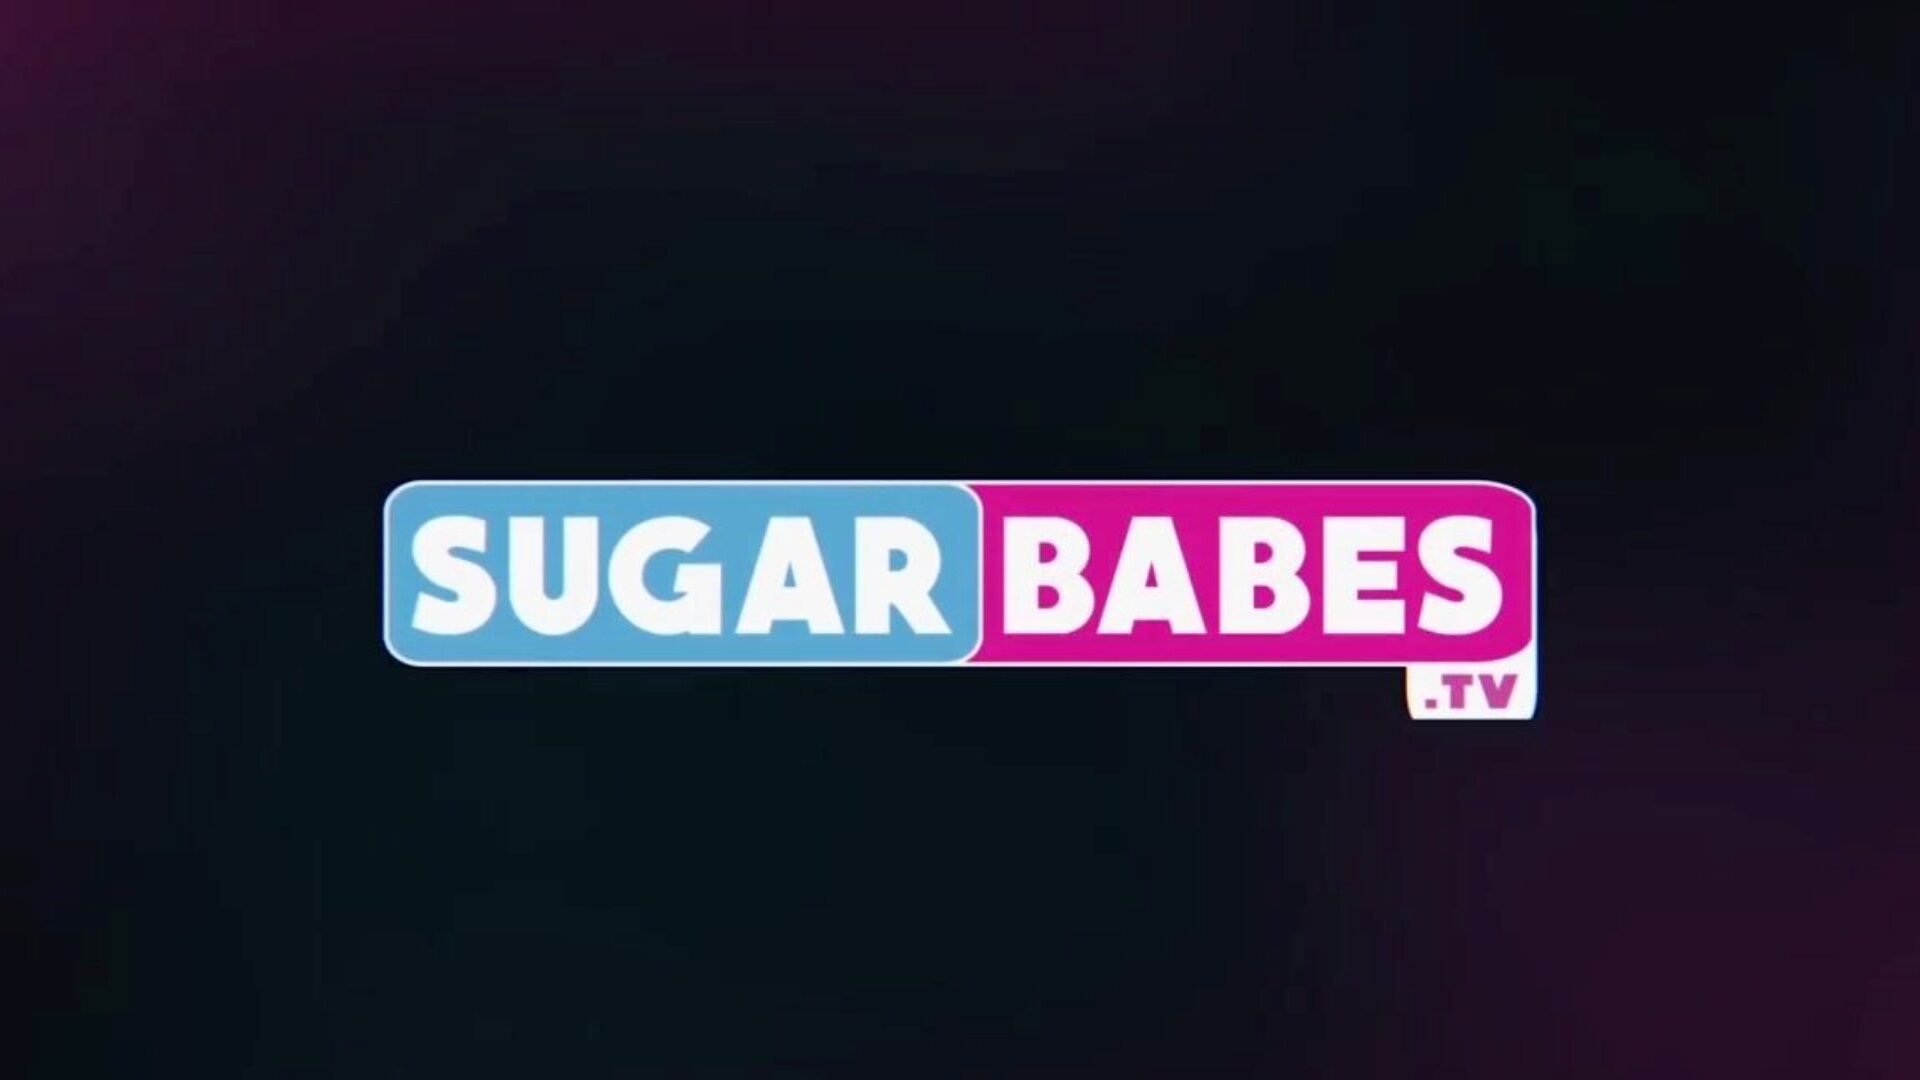 sugarbabestv הבקבוק, חינם סוכר דבש טלוויזיה פורנו hd 6b צפה sugarbabestv הבקבוק וידאו על xhamster, אתר שפופרת האהבה הטובה ביותר HD עם טונות של בחורות סוכר בחינם טלוויזיה סקס לסביות אהבה פורנוגרפיה